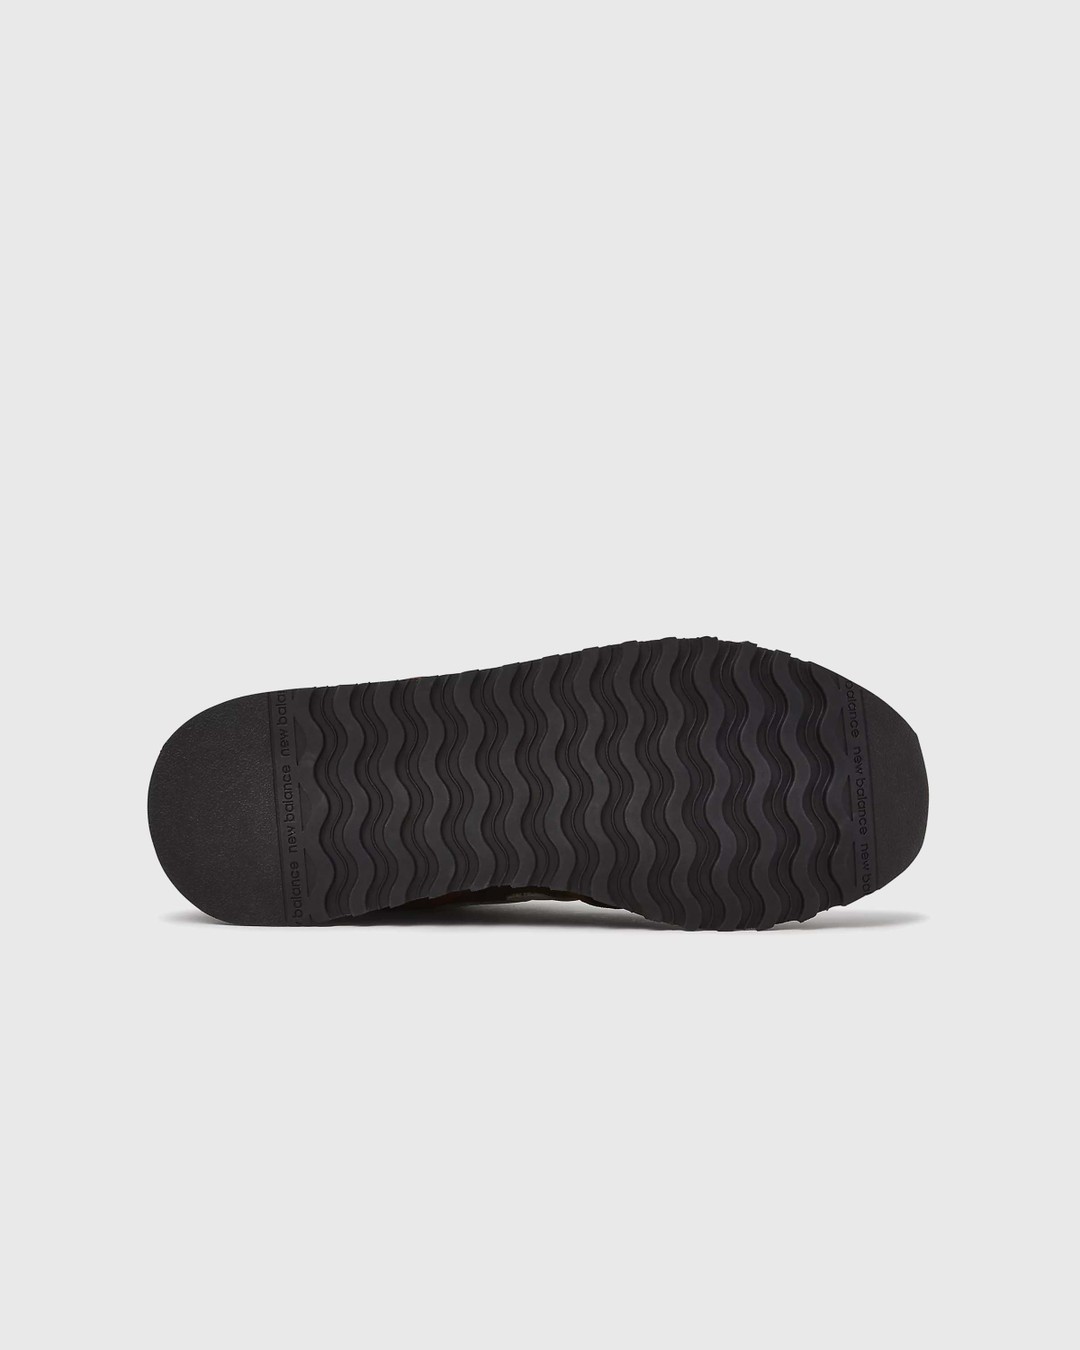 New Balance – M730GBI Brown - Sneakers - Brown - Image 6